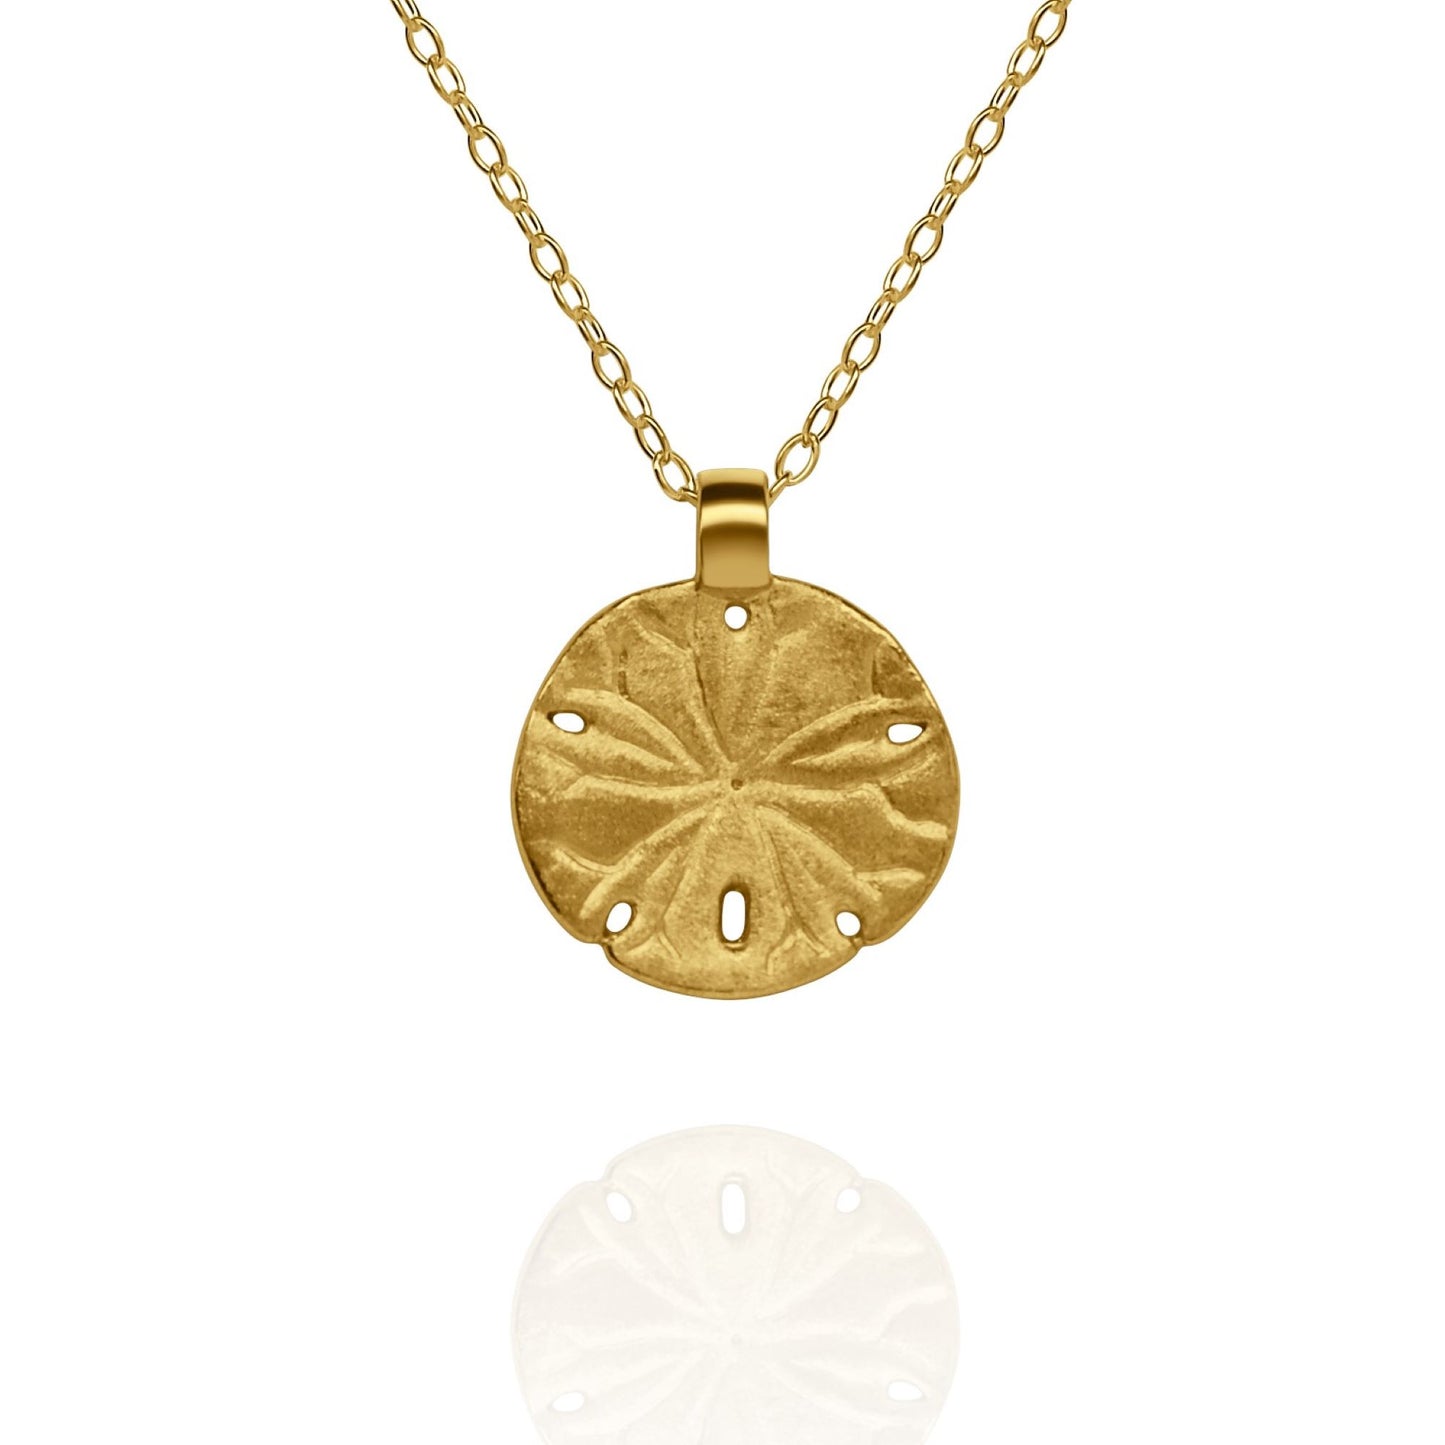 Gold vermeil Sand Dollar charm pendant and chain. © Adrian Ashley